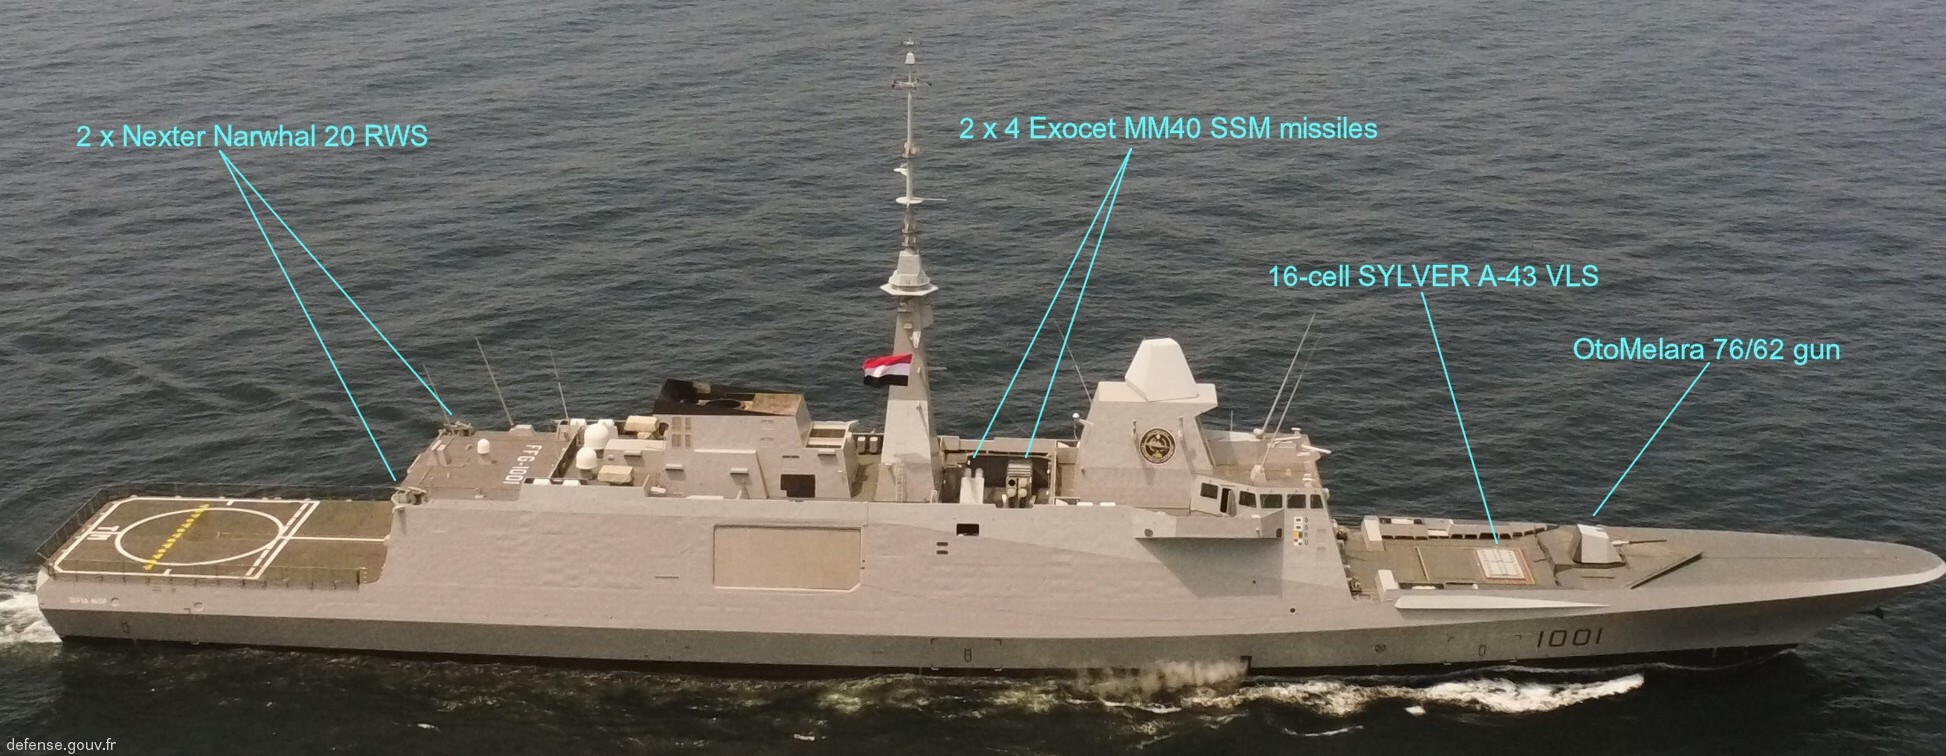 ffg 1001 ens tahya misr fremm class frigate egyptian naval force sylver a-43 aster sam missile mm40 exocet ssm armament